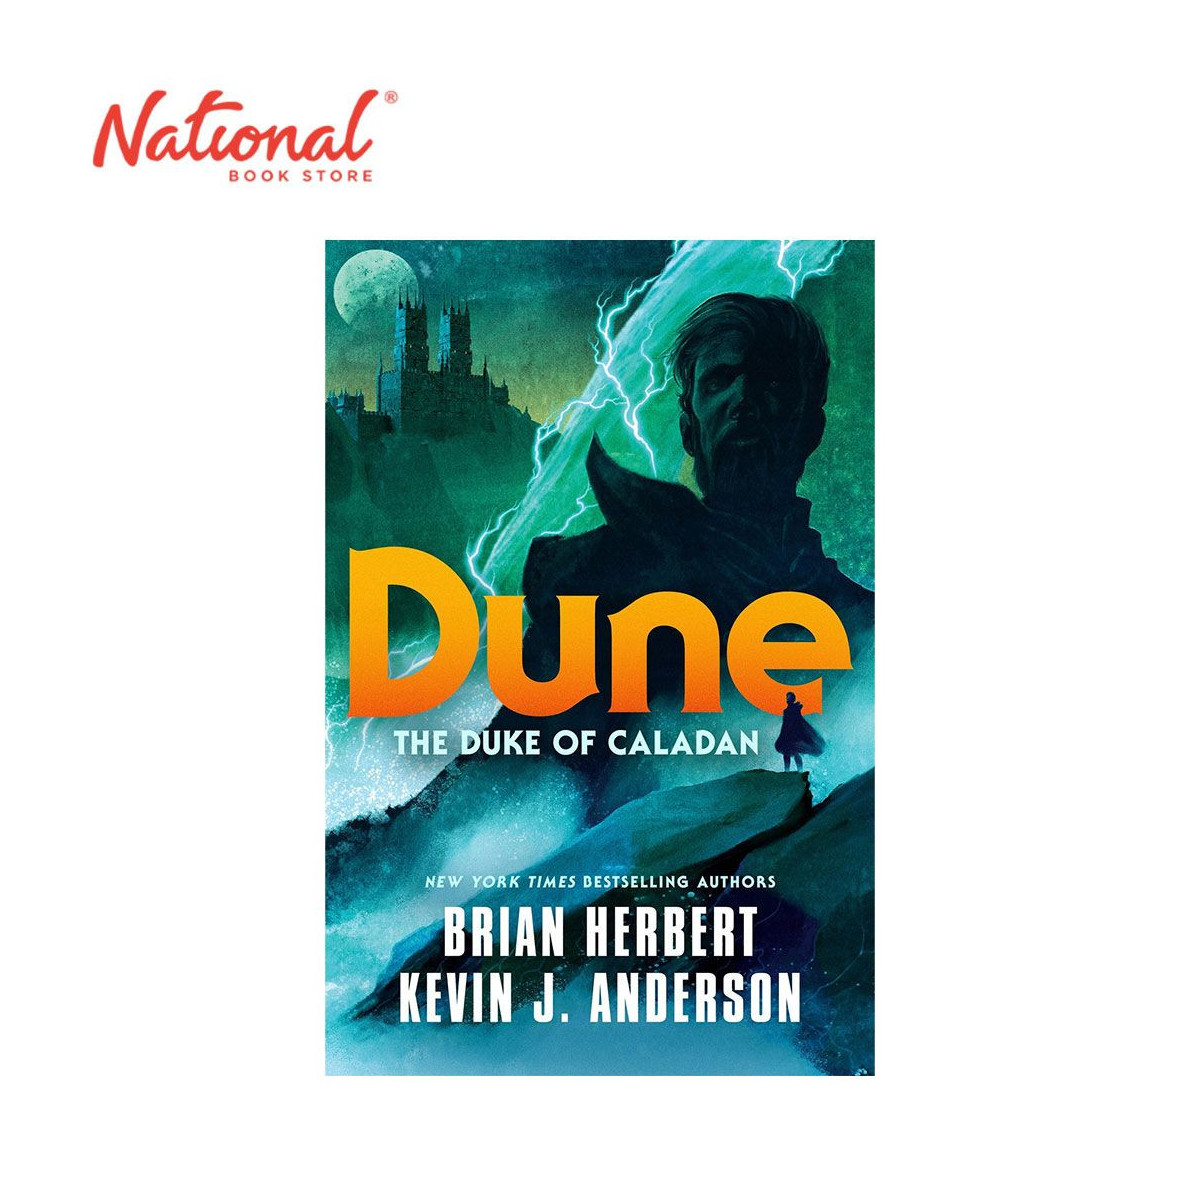 The Caladan Trilogy 1: Dune - The Duke Of Caladan by Brian Herbert - Trade Paperback - Sci-Fi